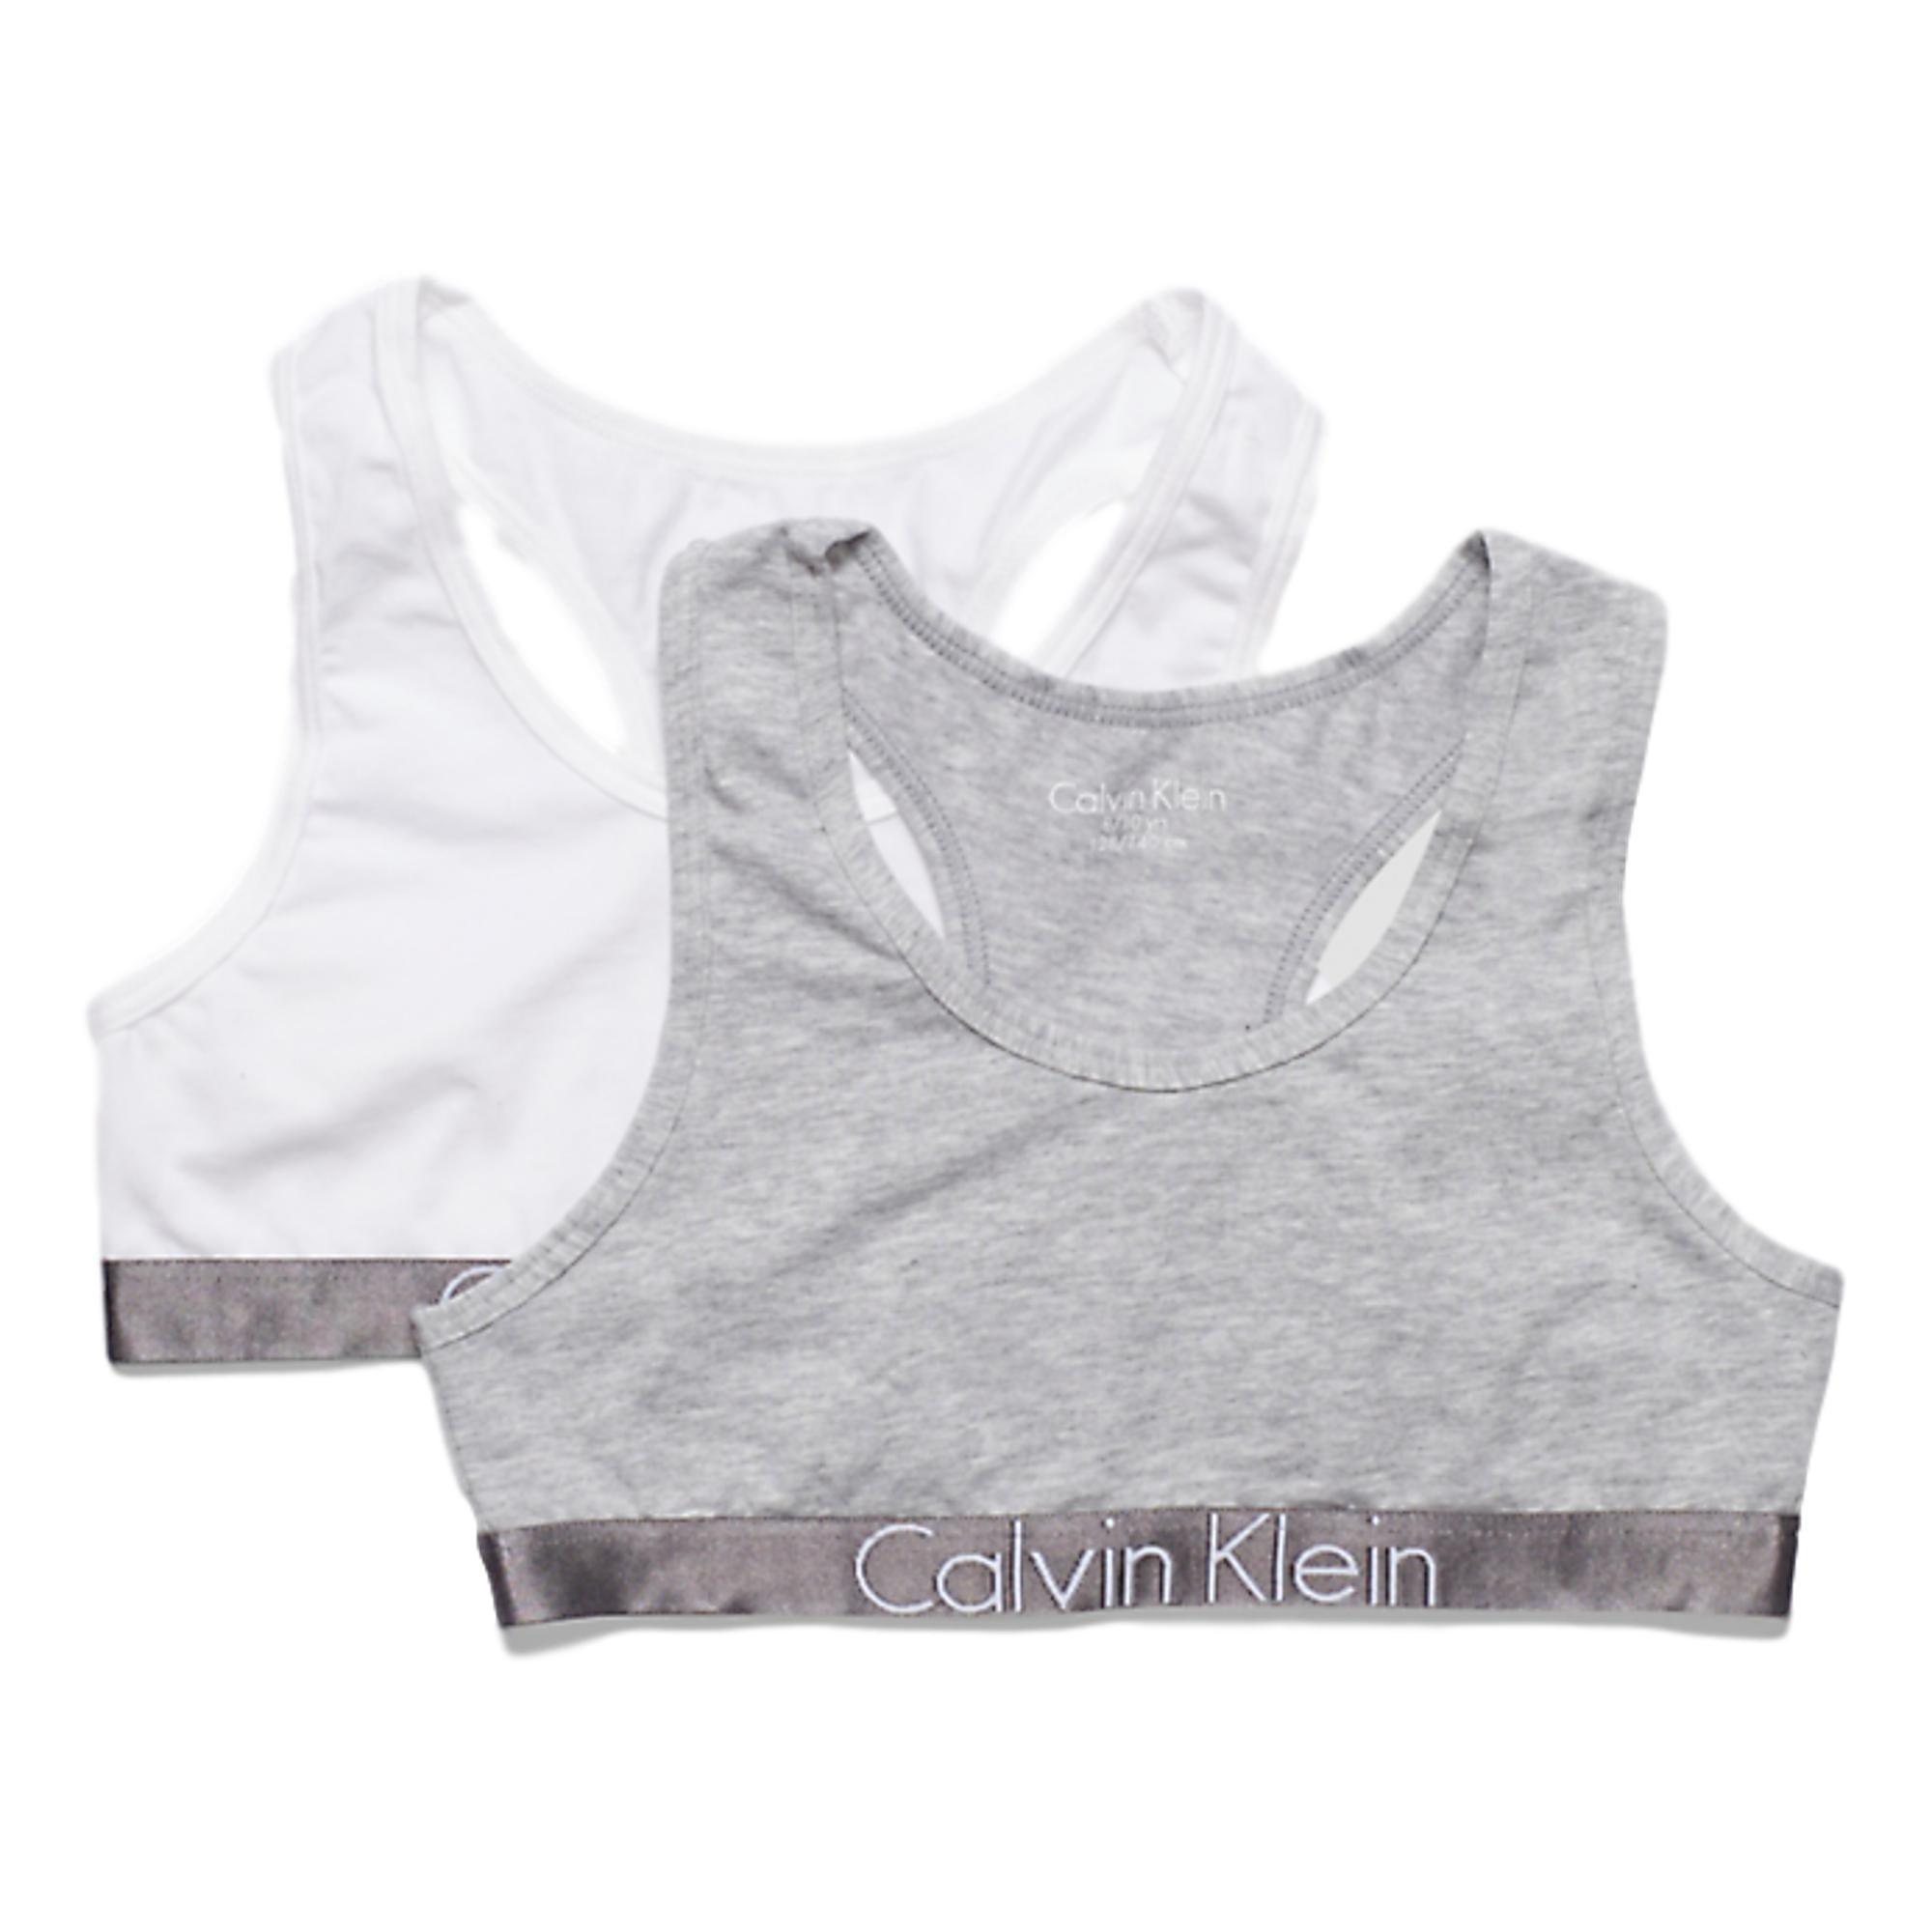 Pack-2 Bragas Calvin Klein Customized Stretch niña blanco y gris